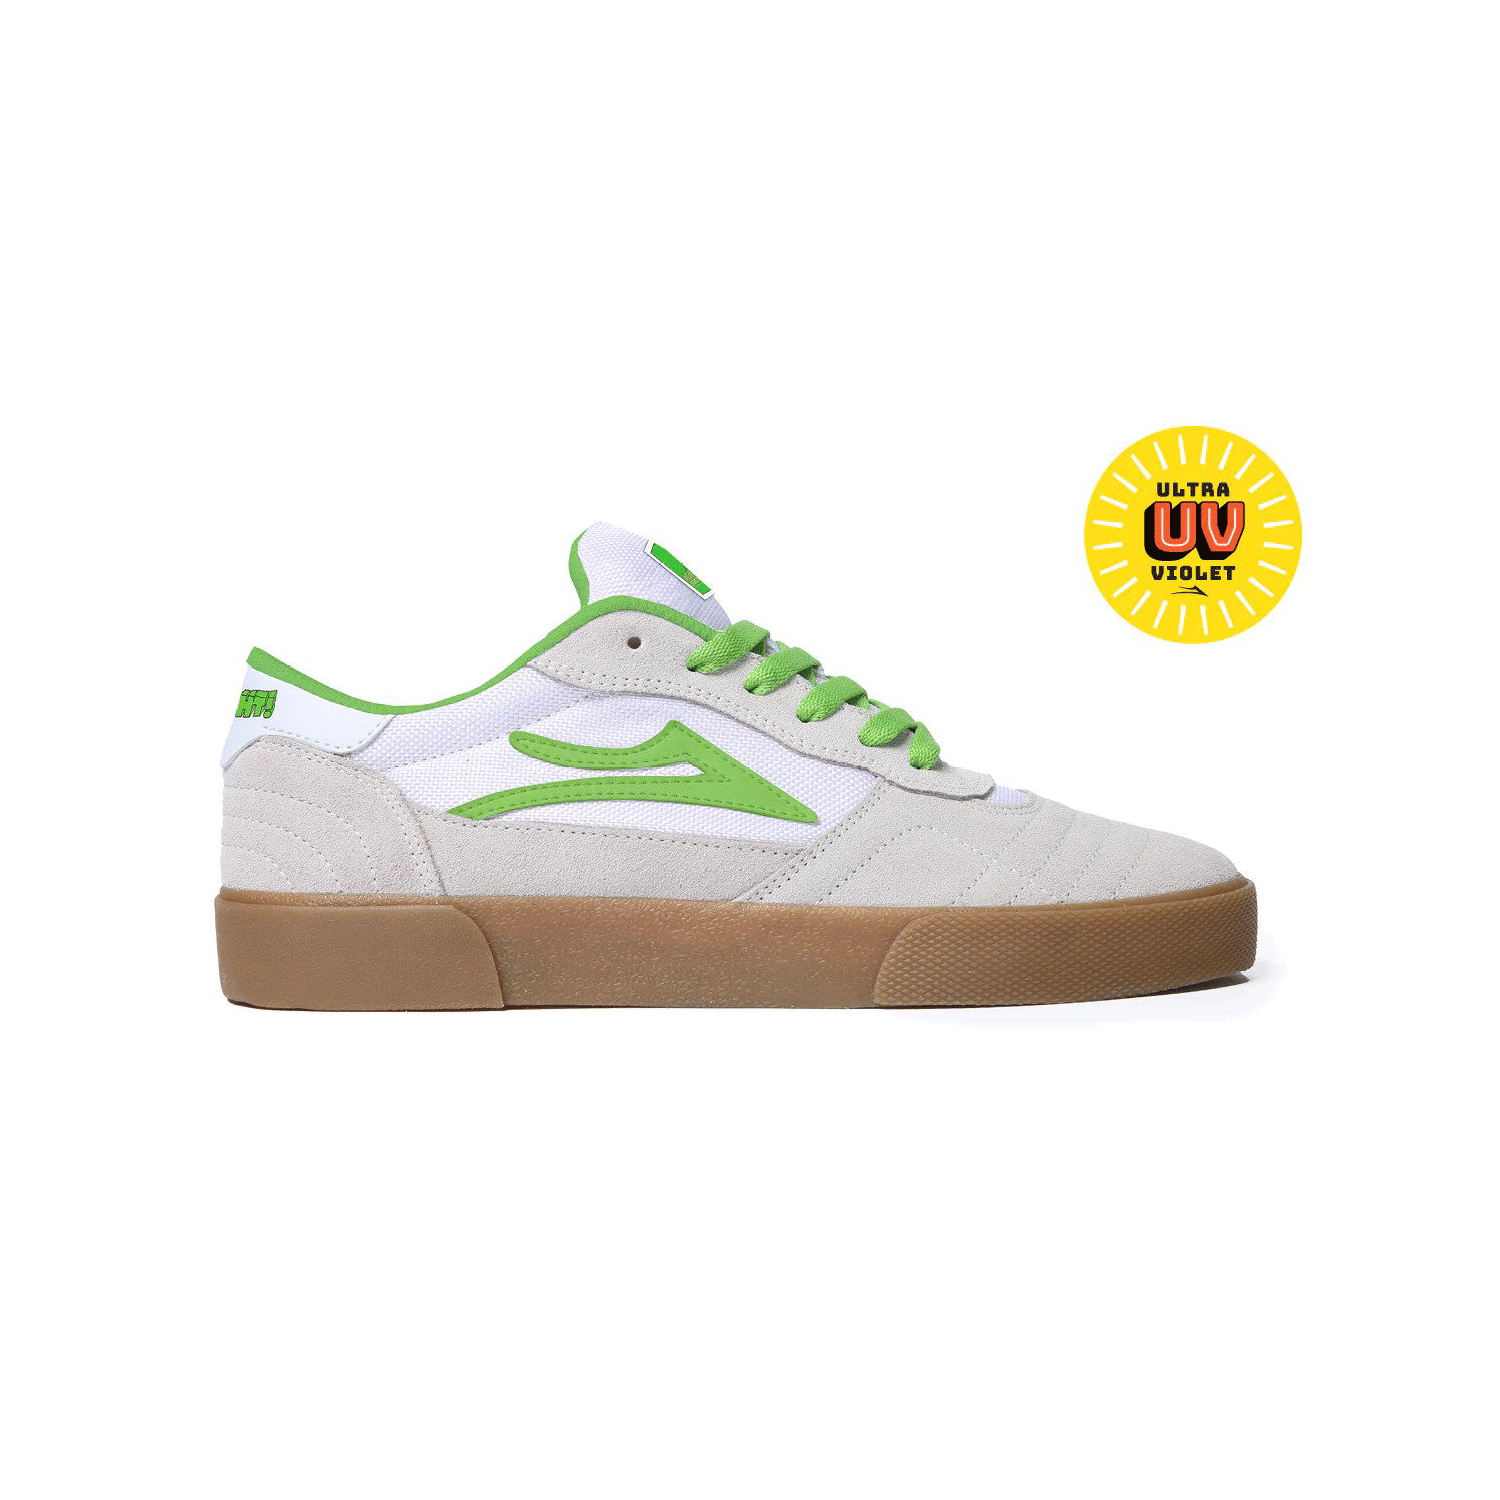 Lakai - Yeah Right Cambridge Shoes - White/UV Green SALE